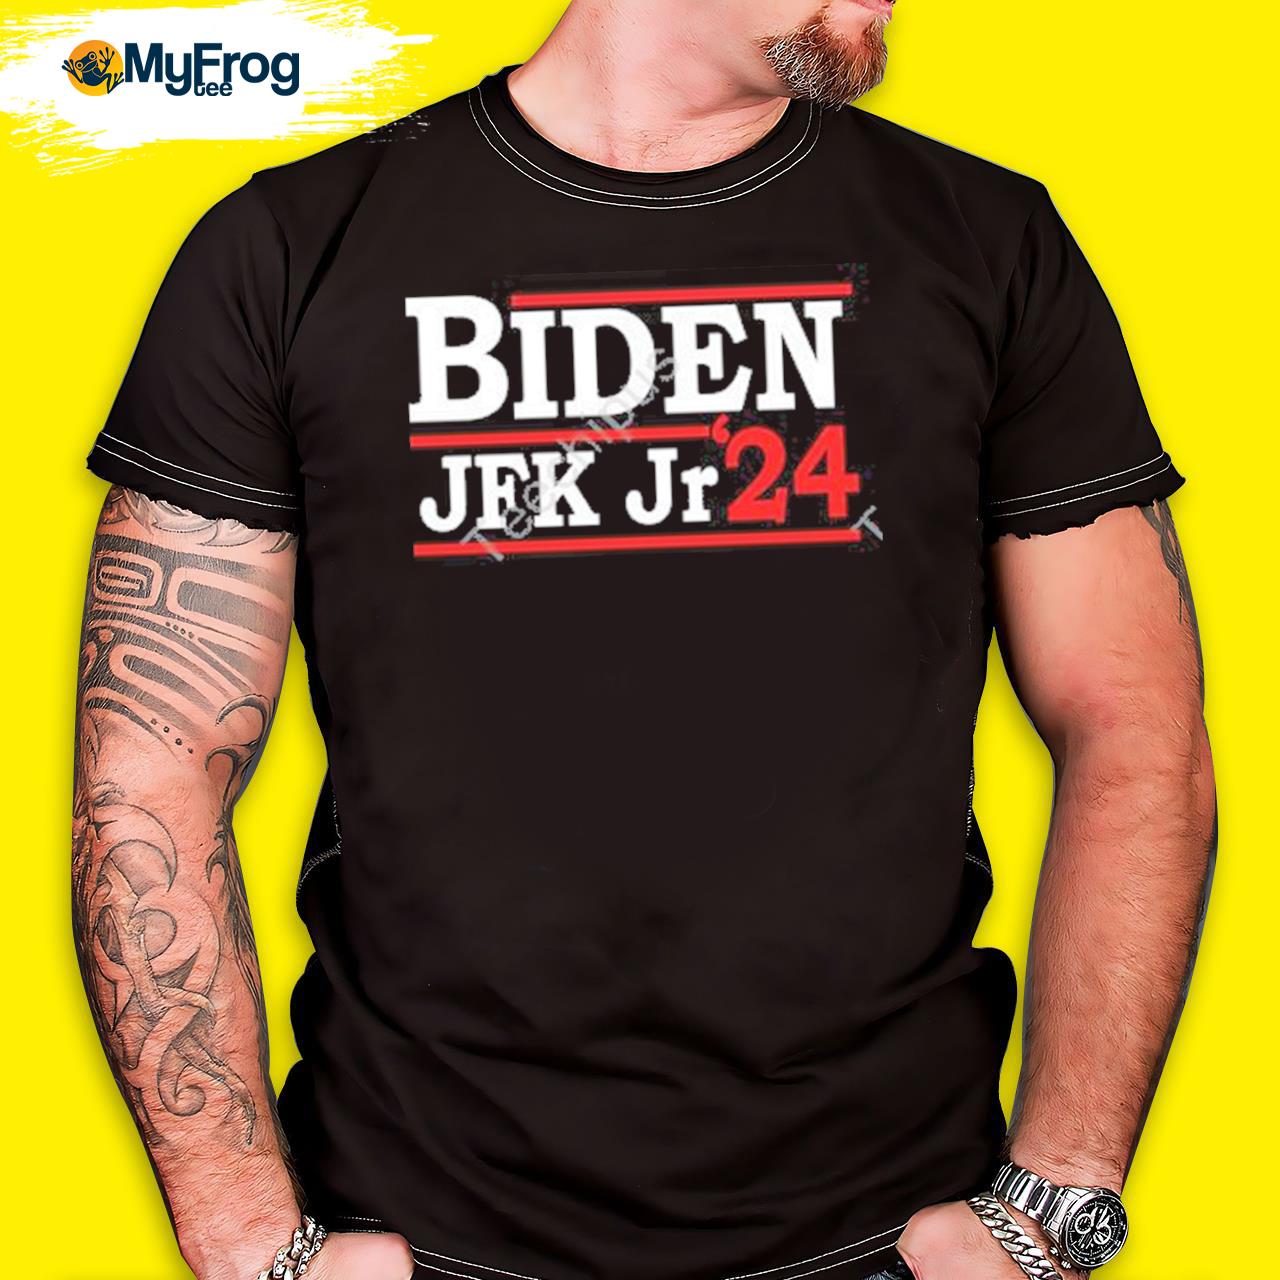 Joe Biden Jfk Jr 2024 Shirt